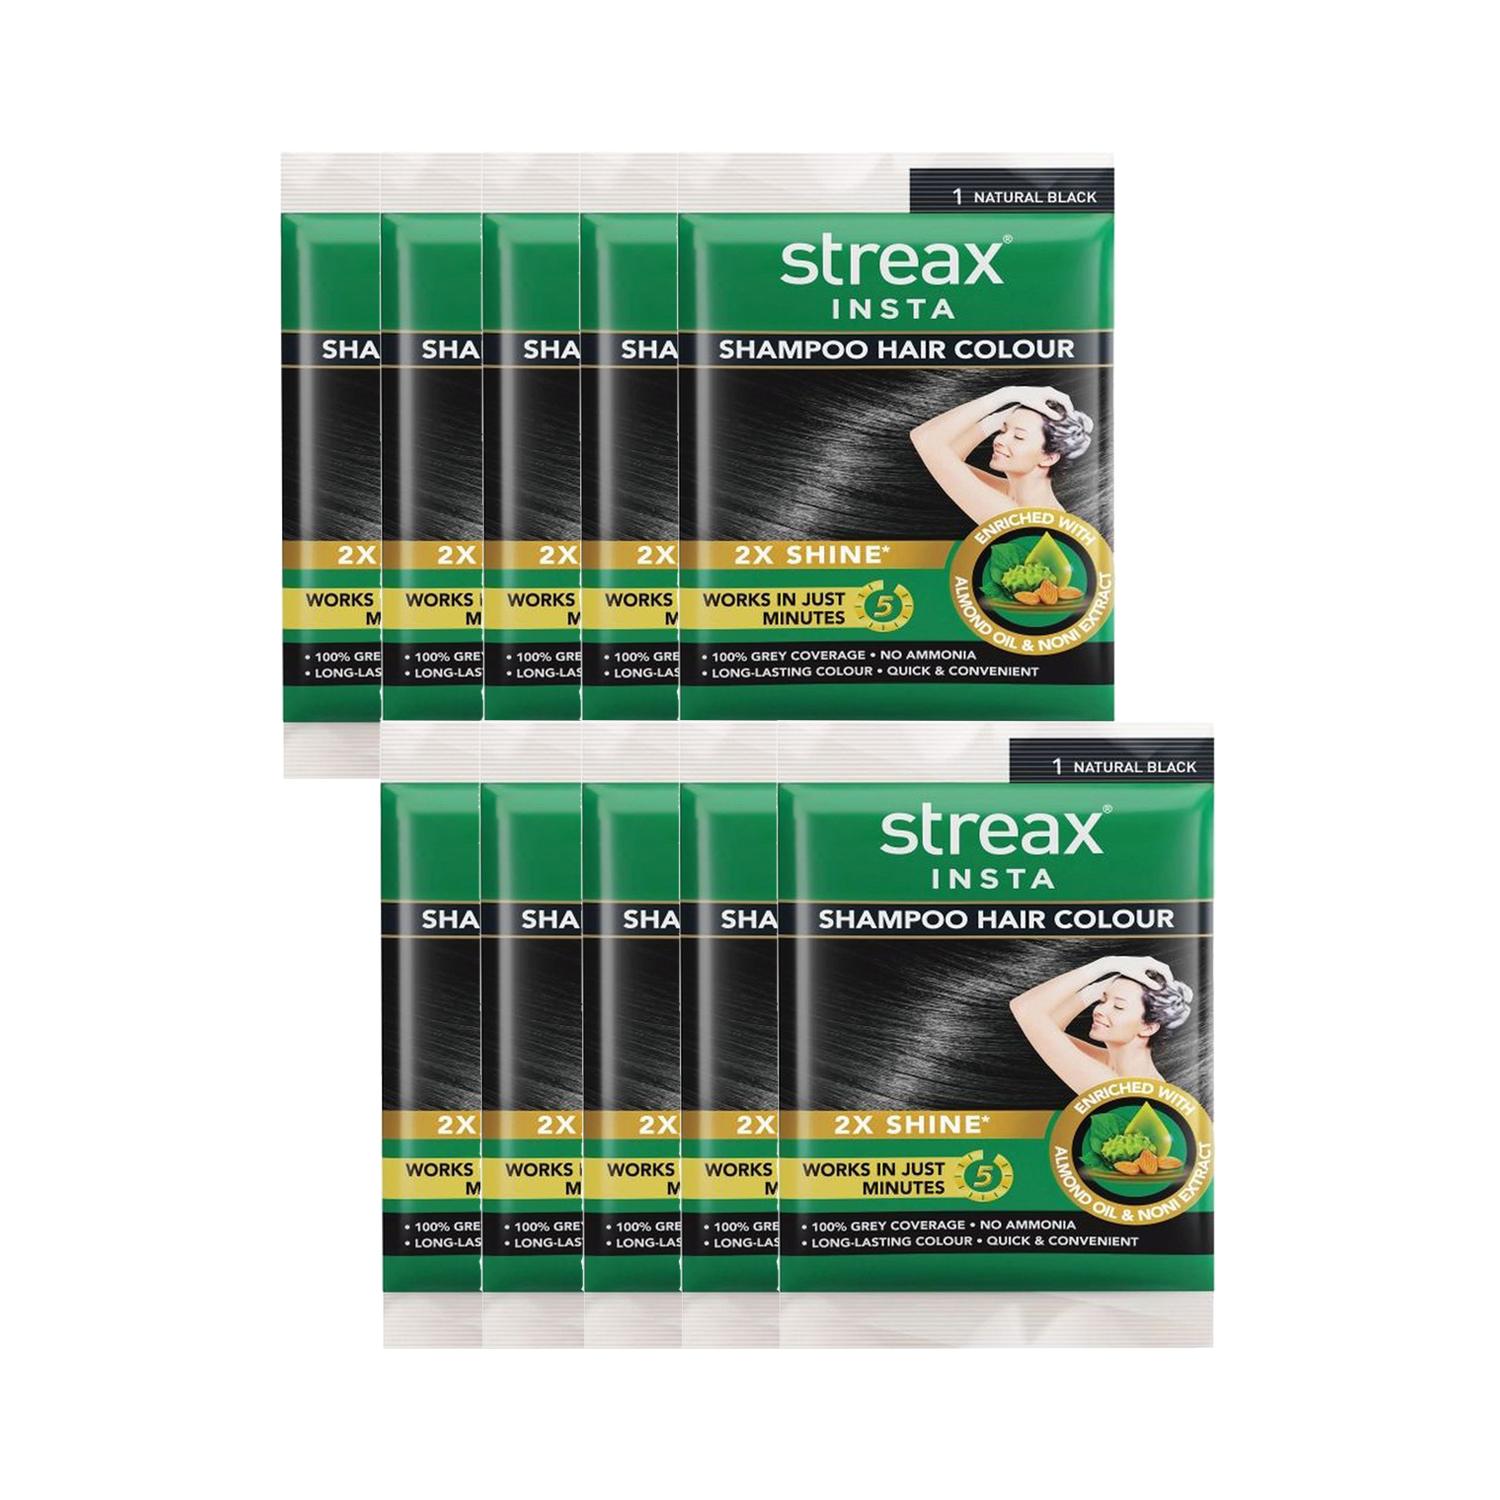 Streax Insta Shampoo Hair Colour - Natural Black (18ml) (Pack of 10) Combo